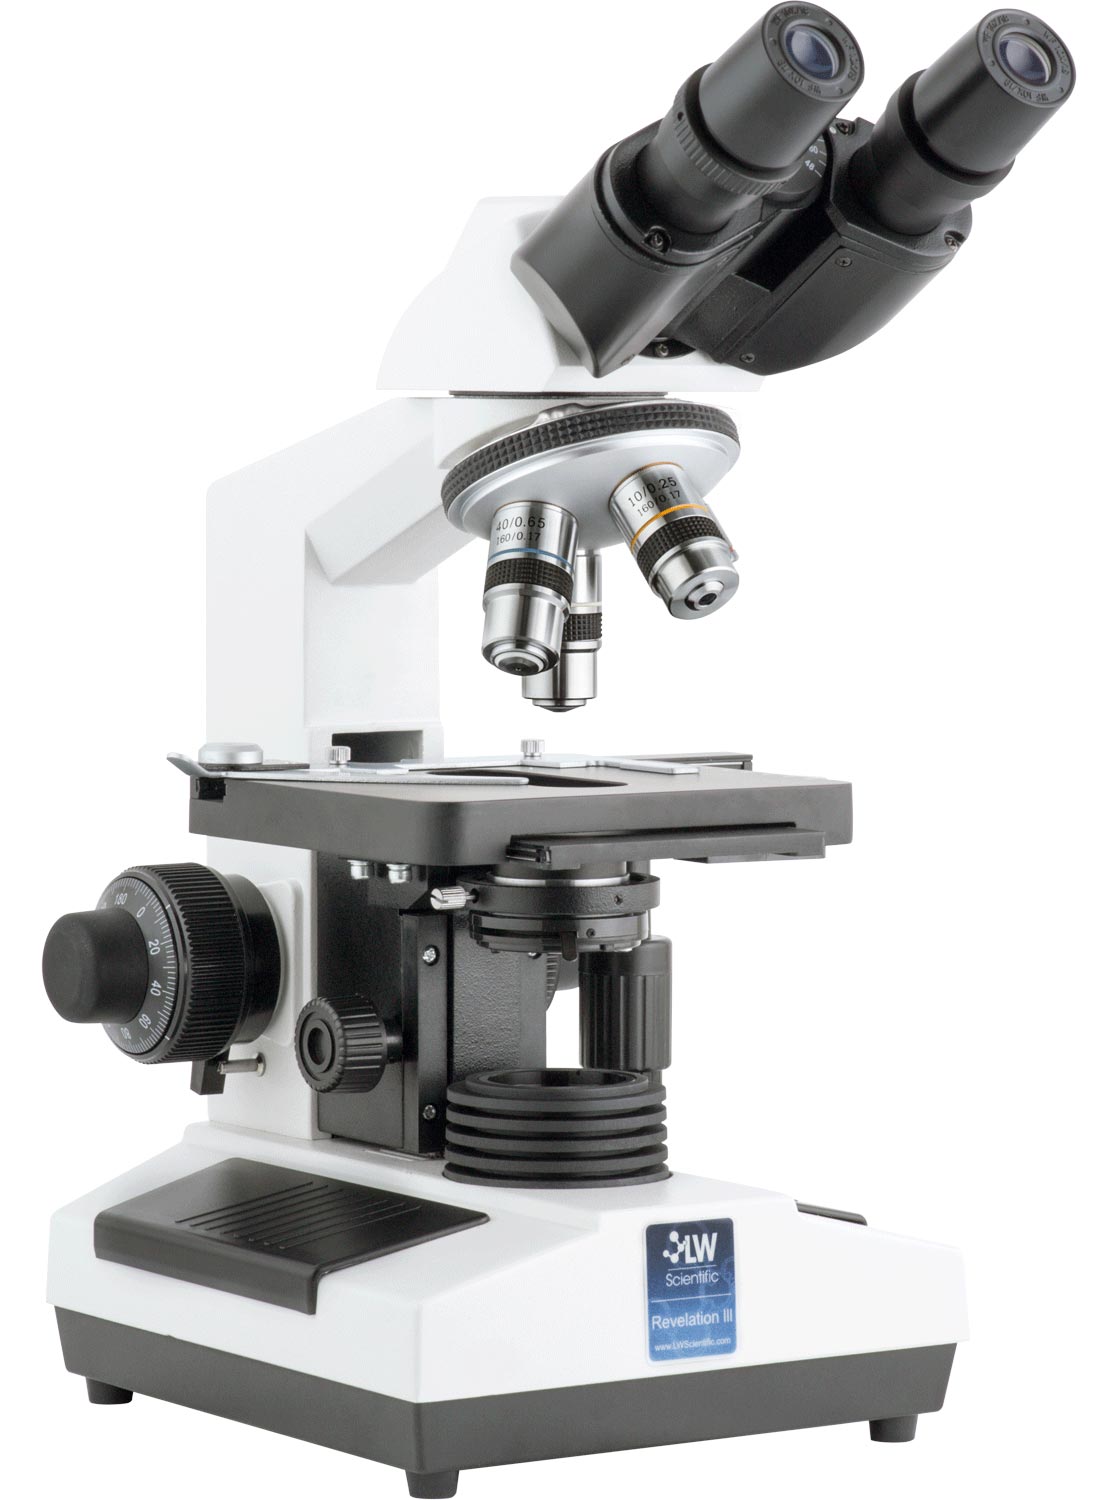 Revelation III Medical Microscope